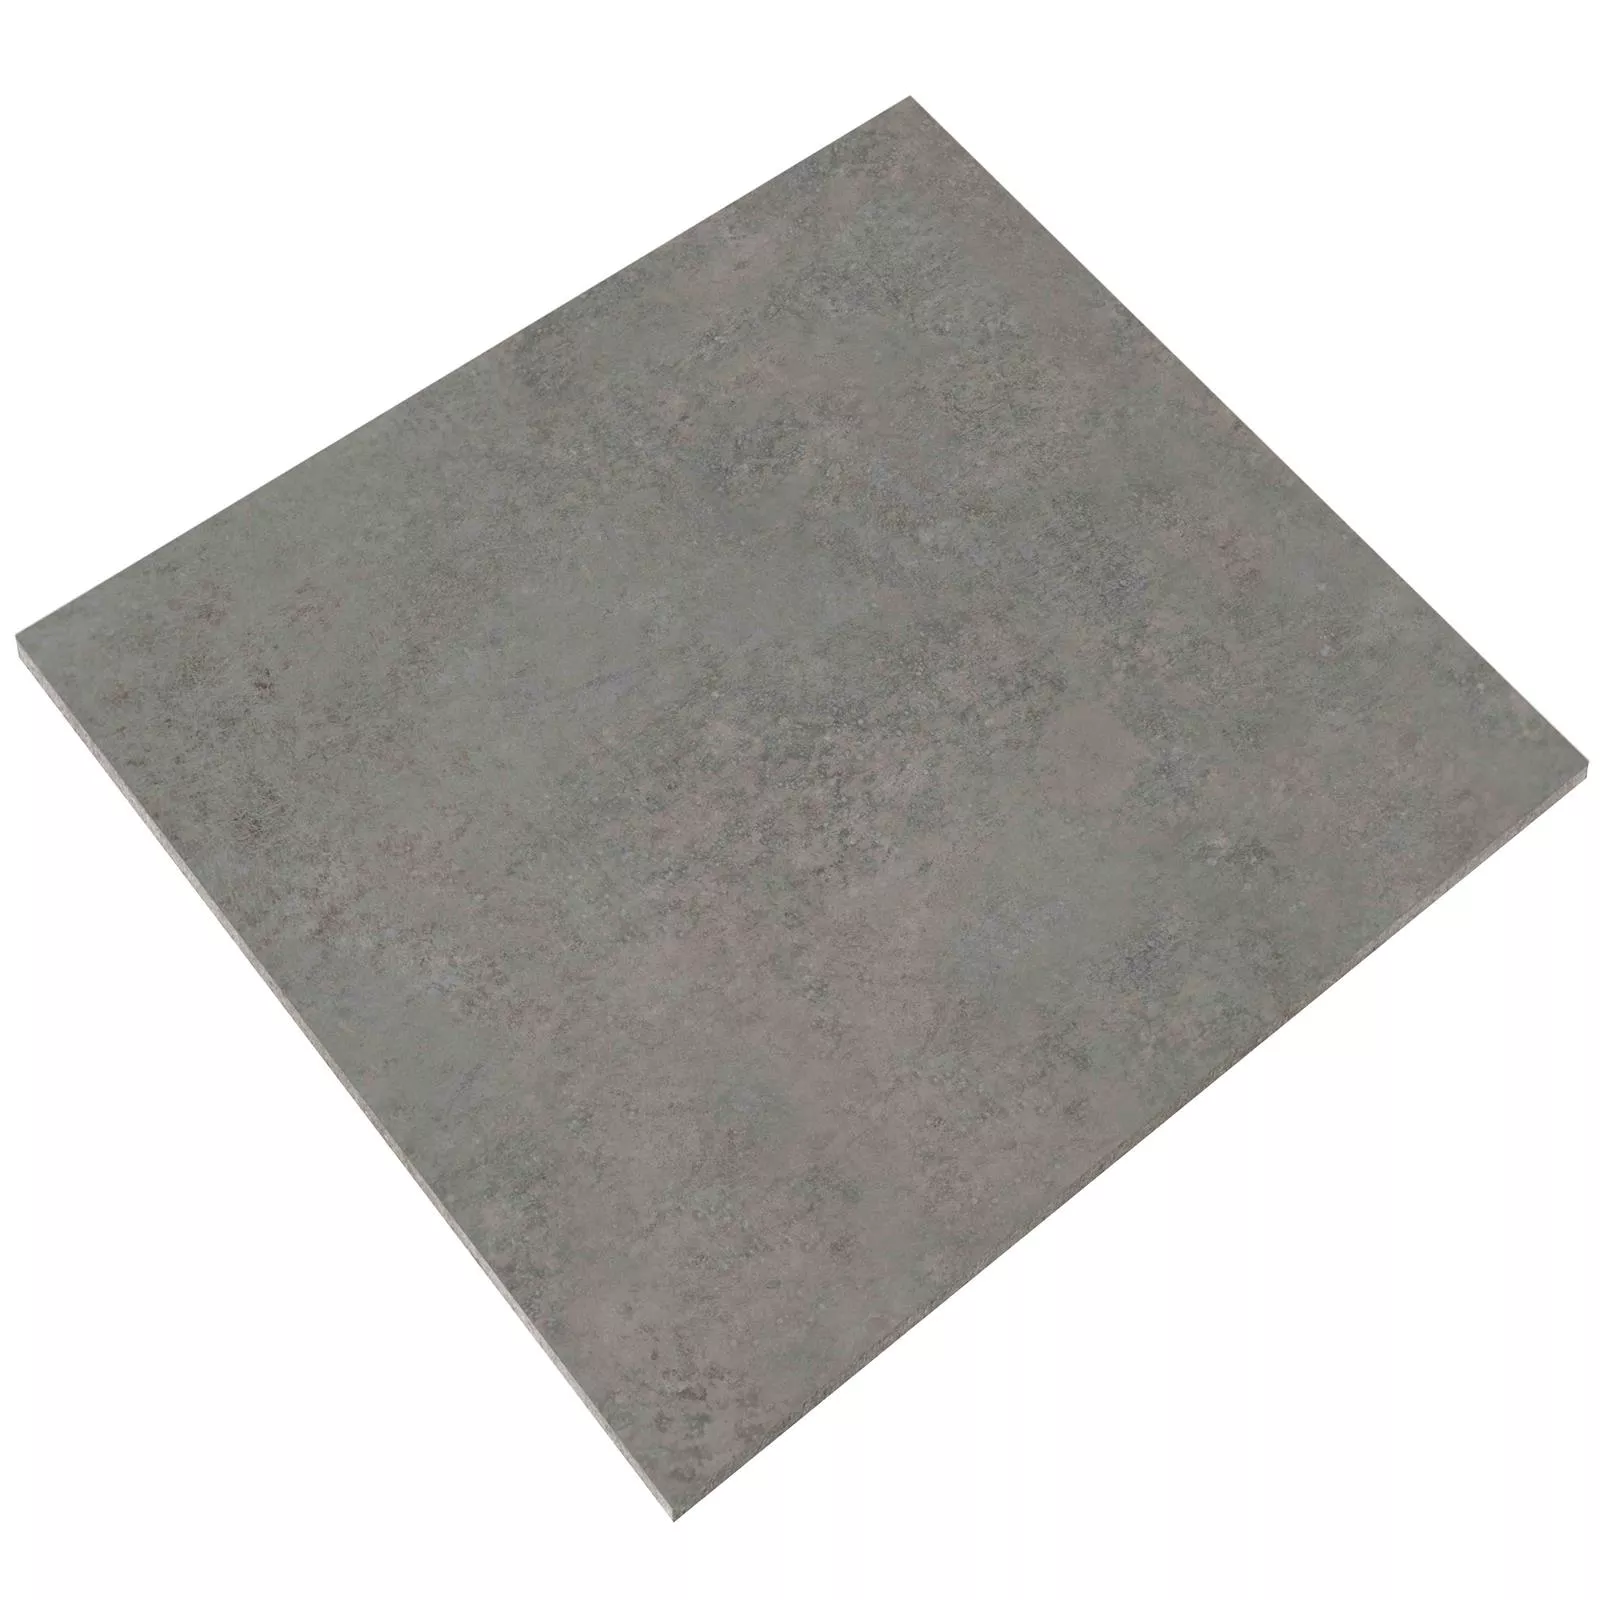 Sample Floor Tiles Peaceway Taupe 60x60cm